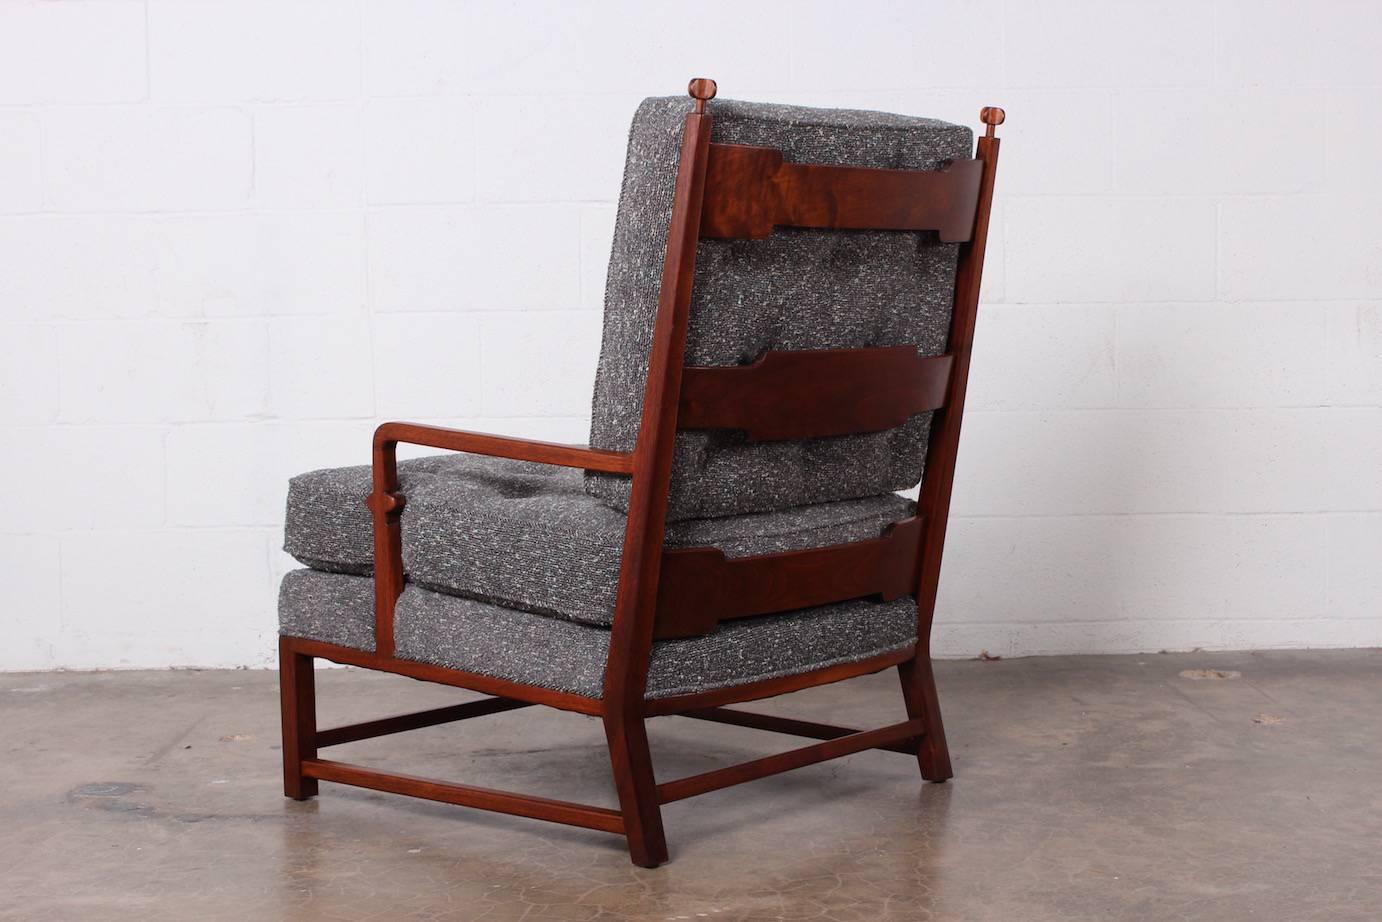 A rare mahogany throne chair designed by Tommi Parzinger for Parzinger originals.